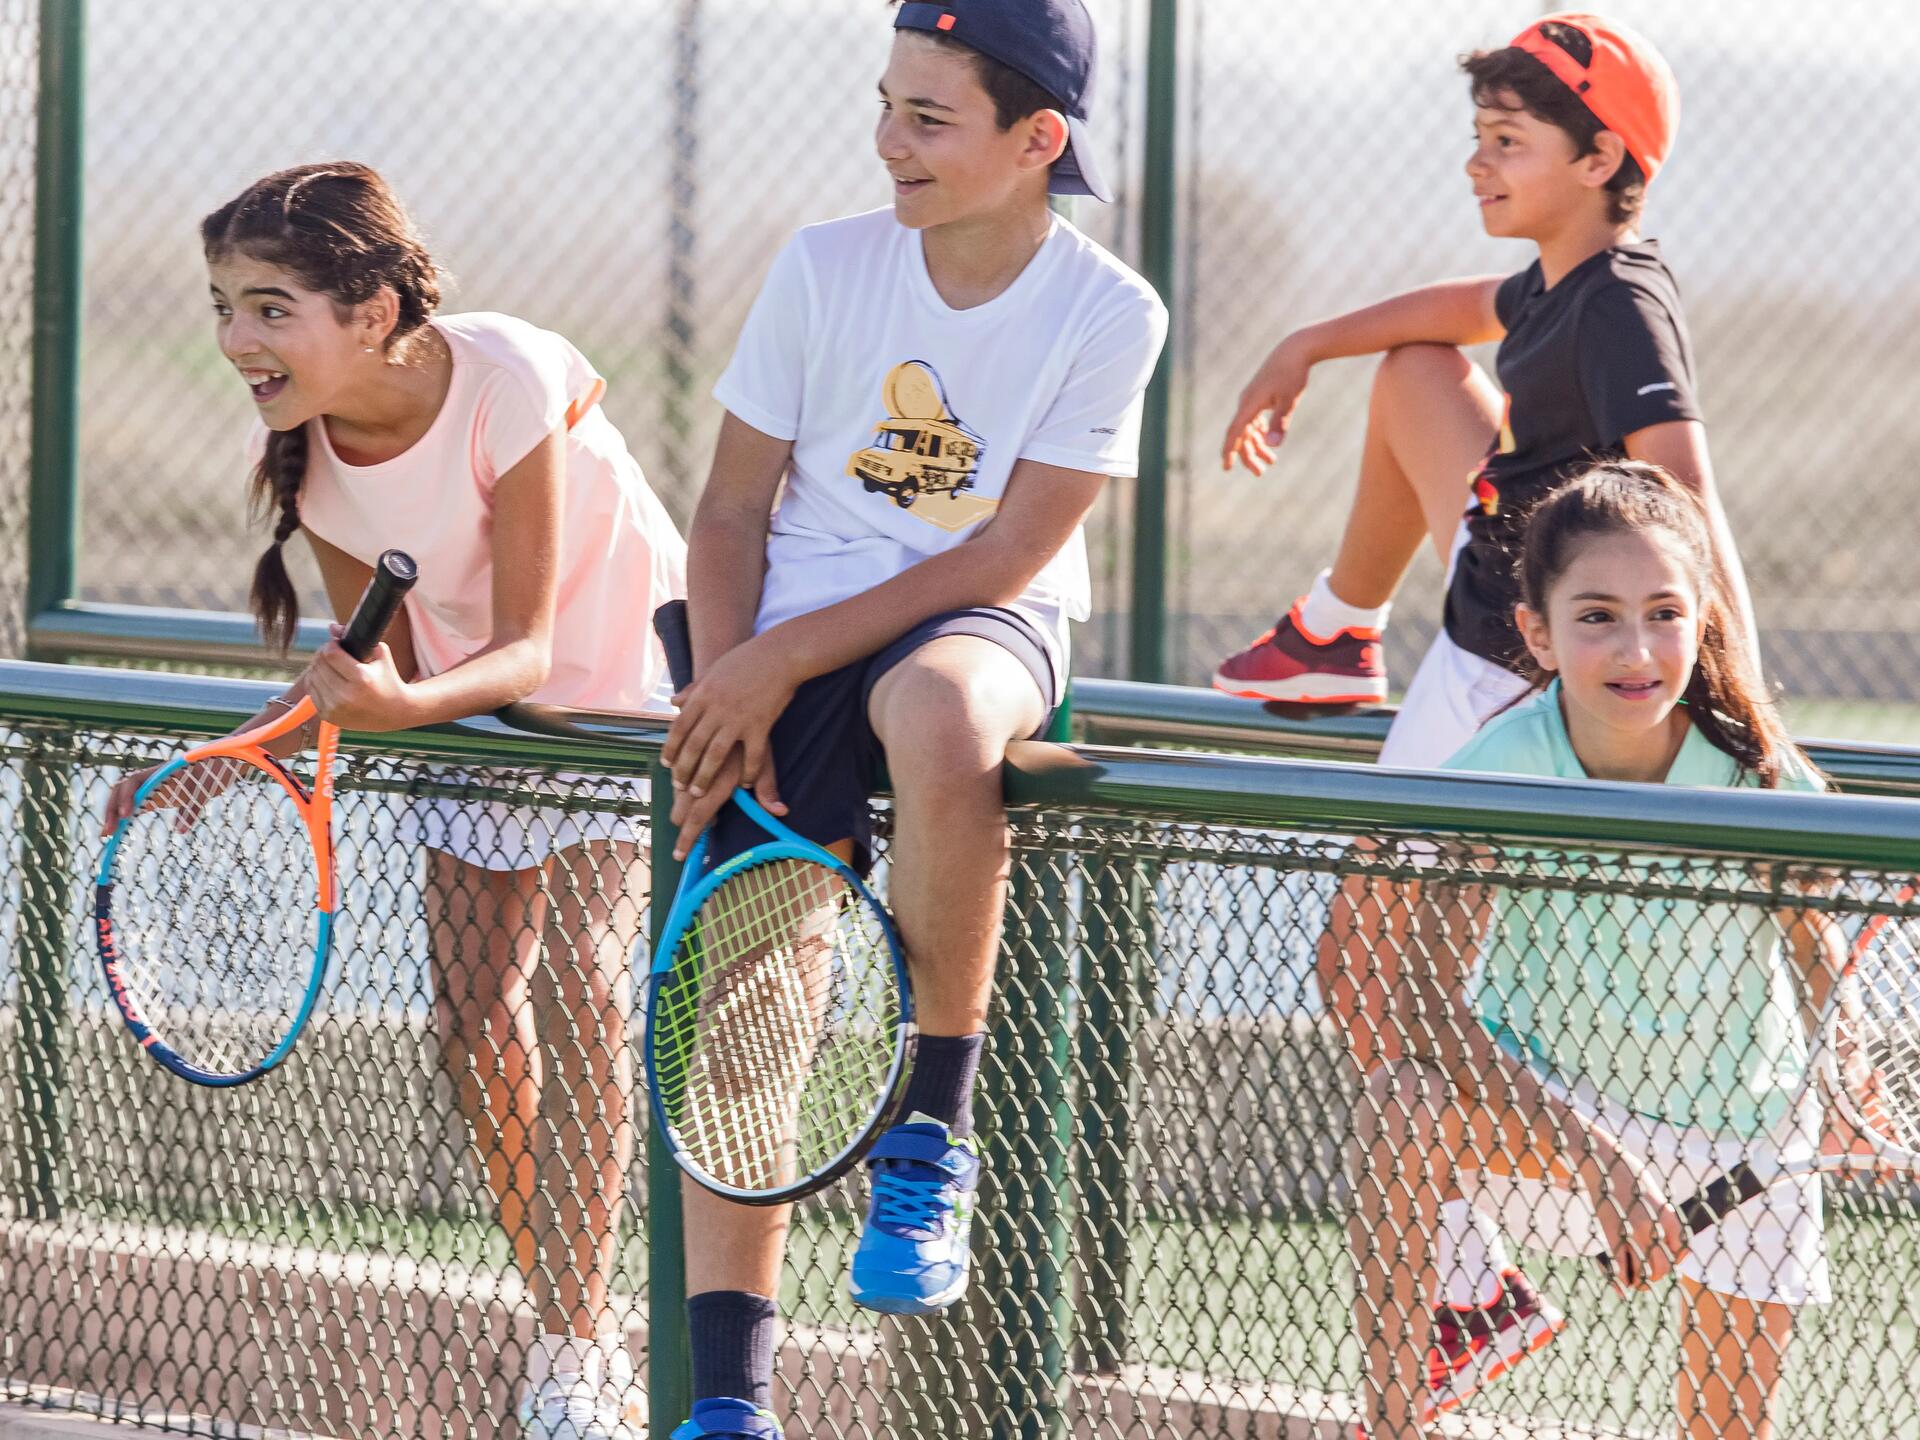 Tennis social sport